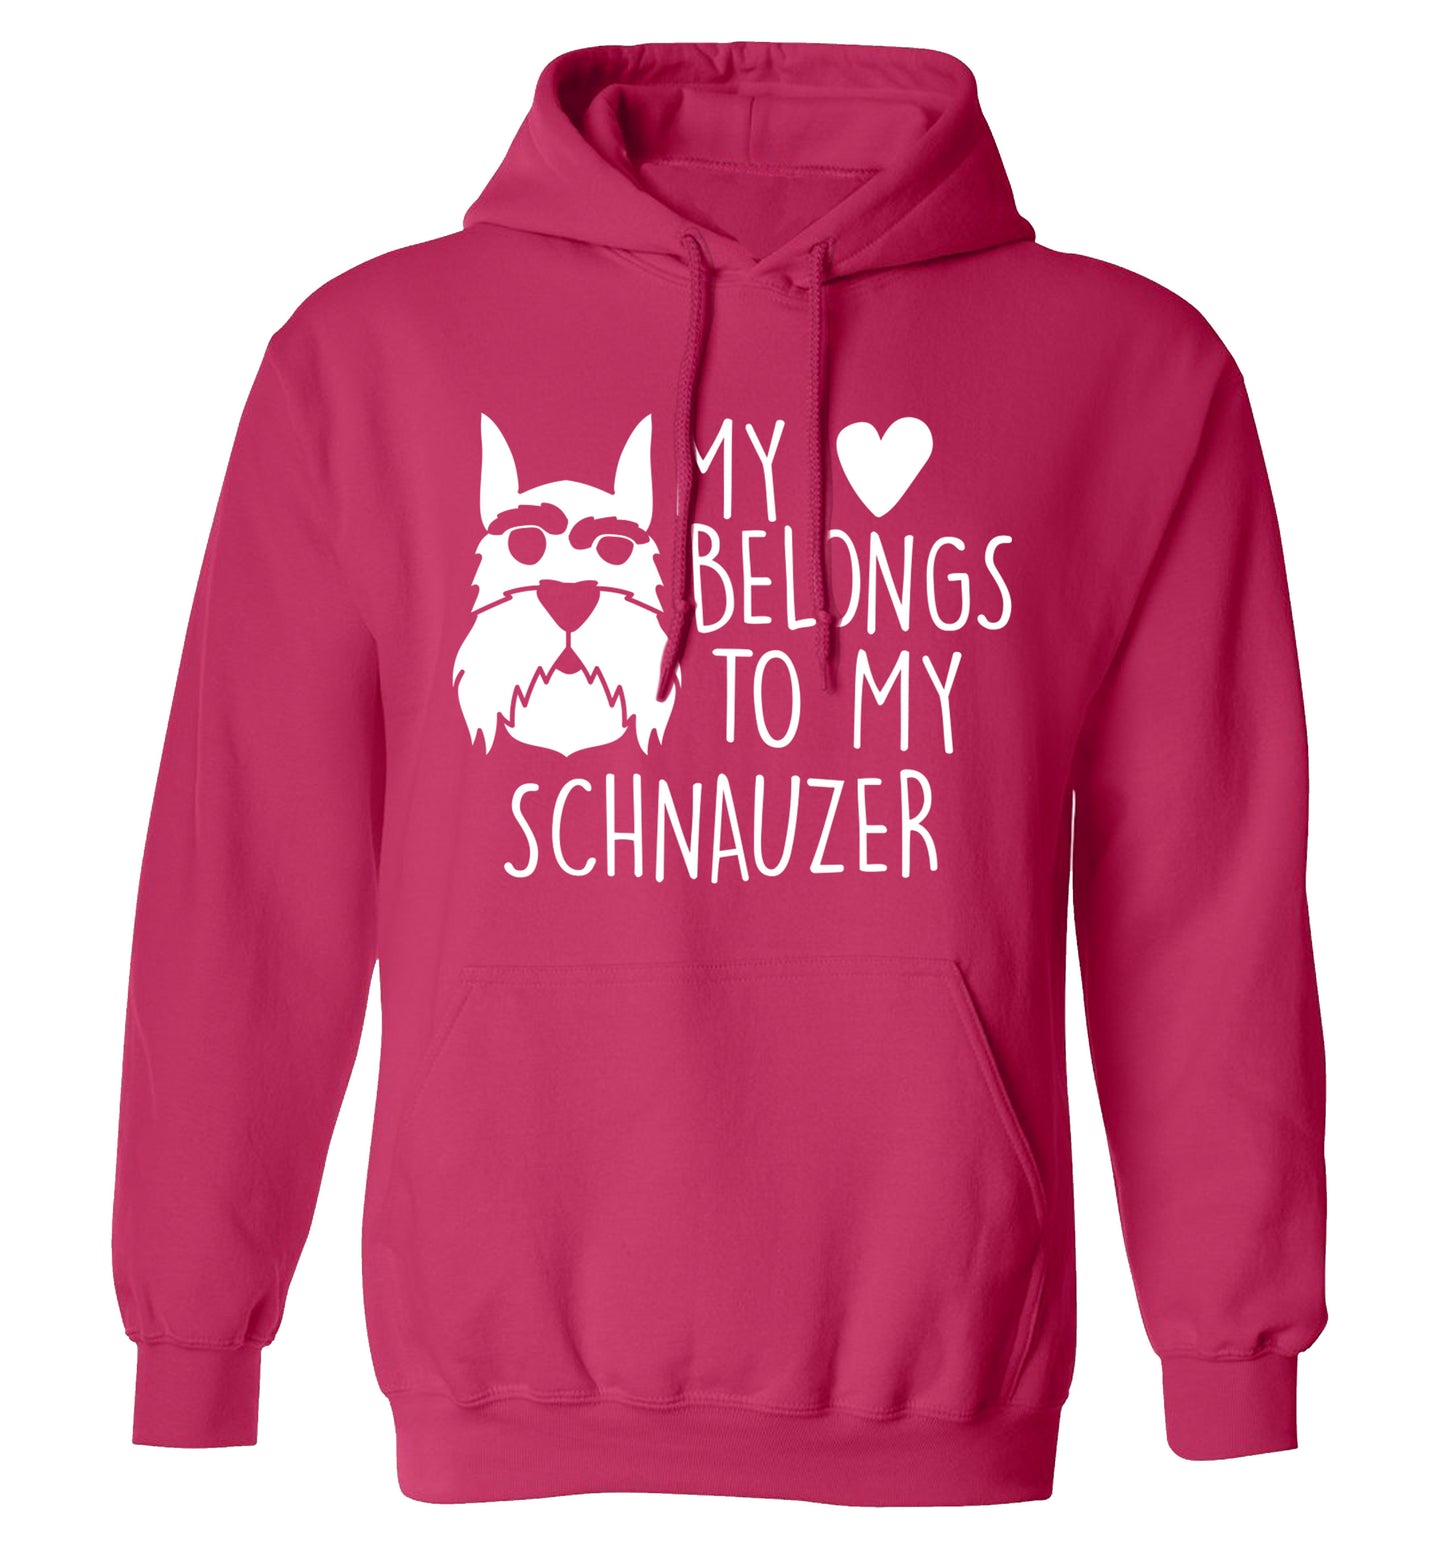 My heart belongs to my schnauzer adults unisex pink hoodie 2XL